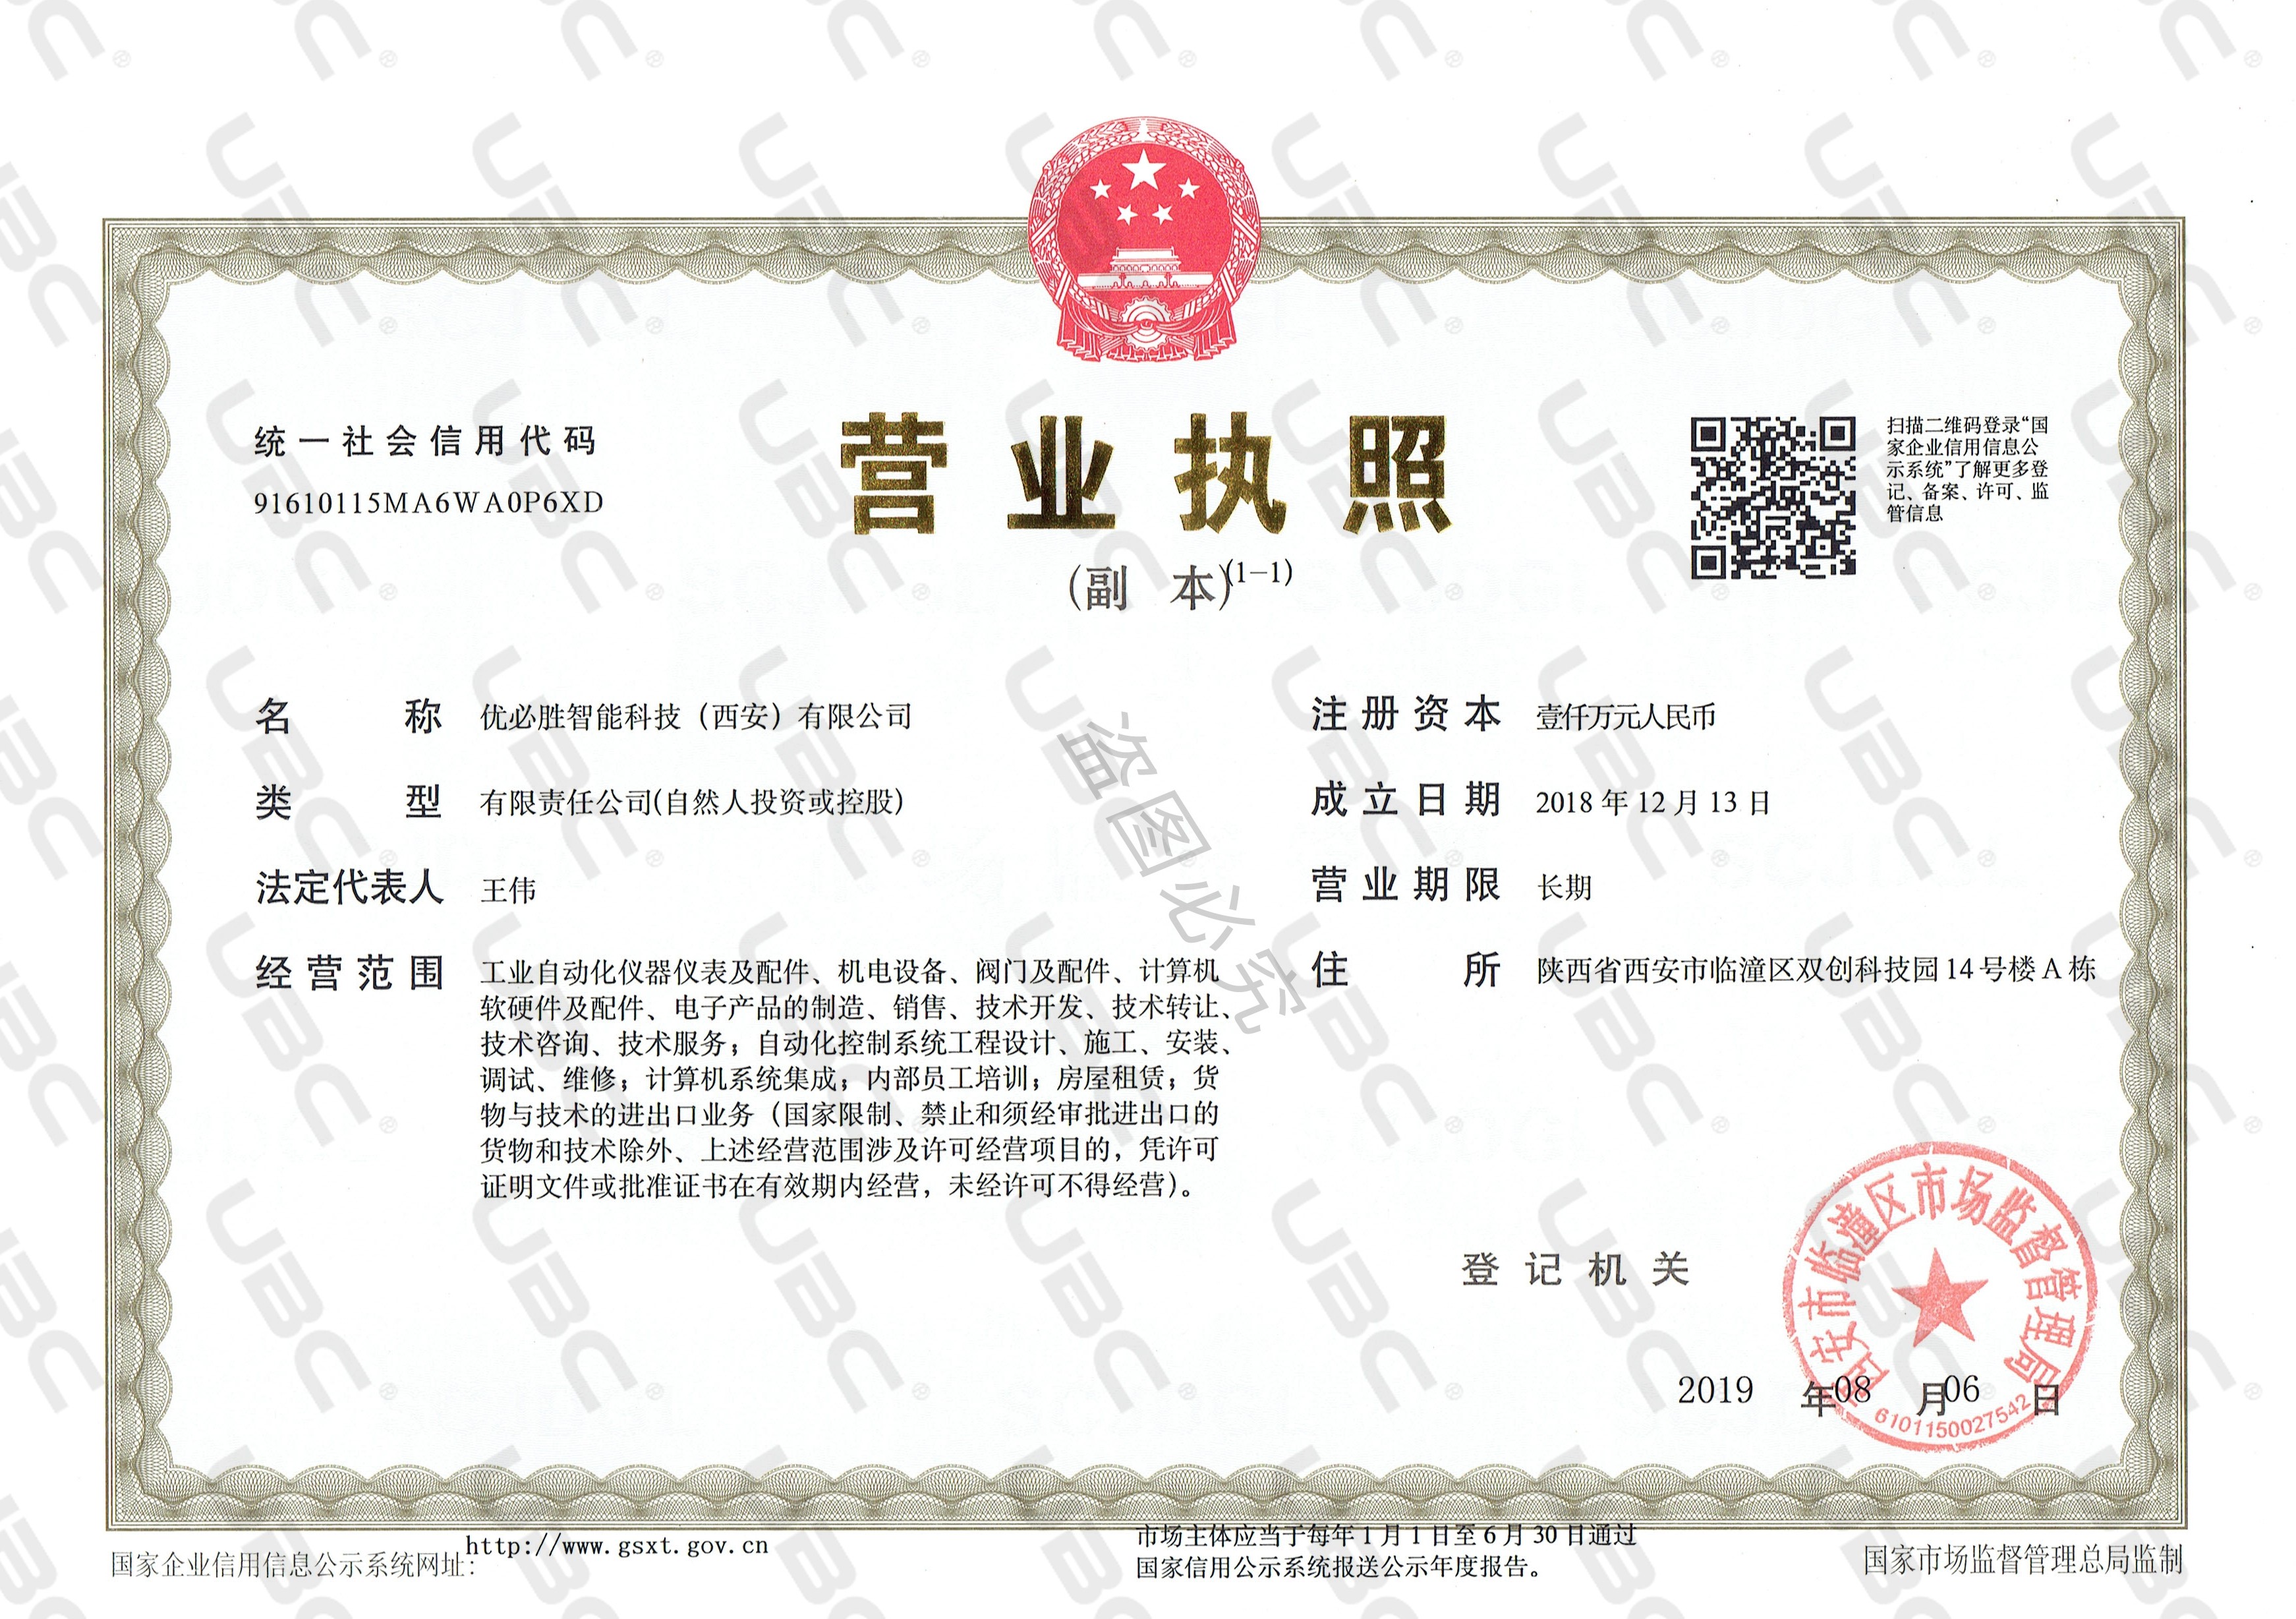 UBC Intelligent Technology (Xi'an) Co., Ltd